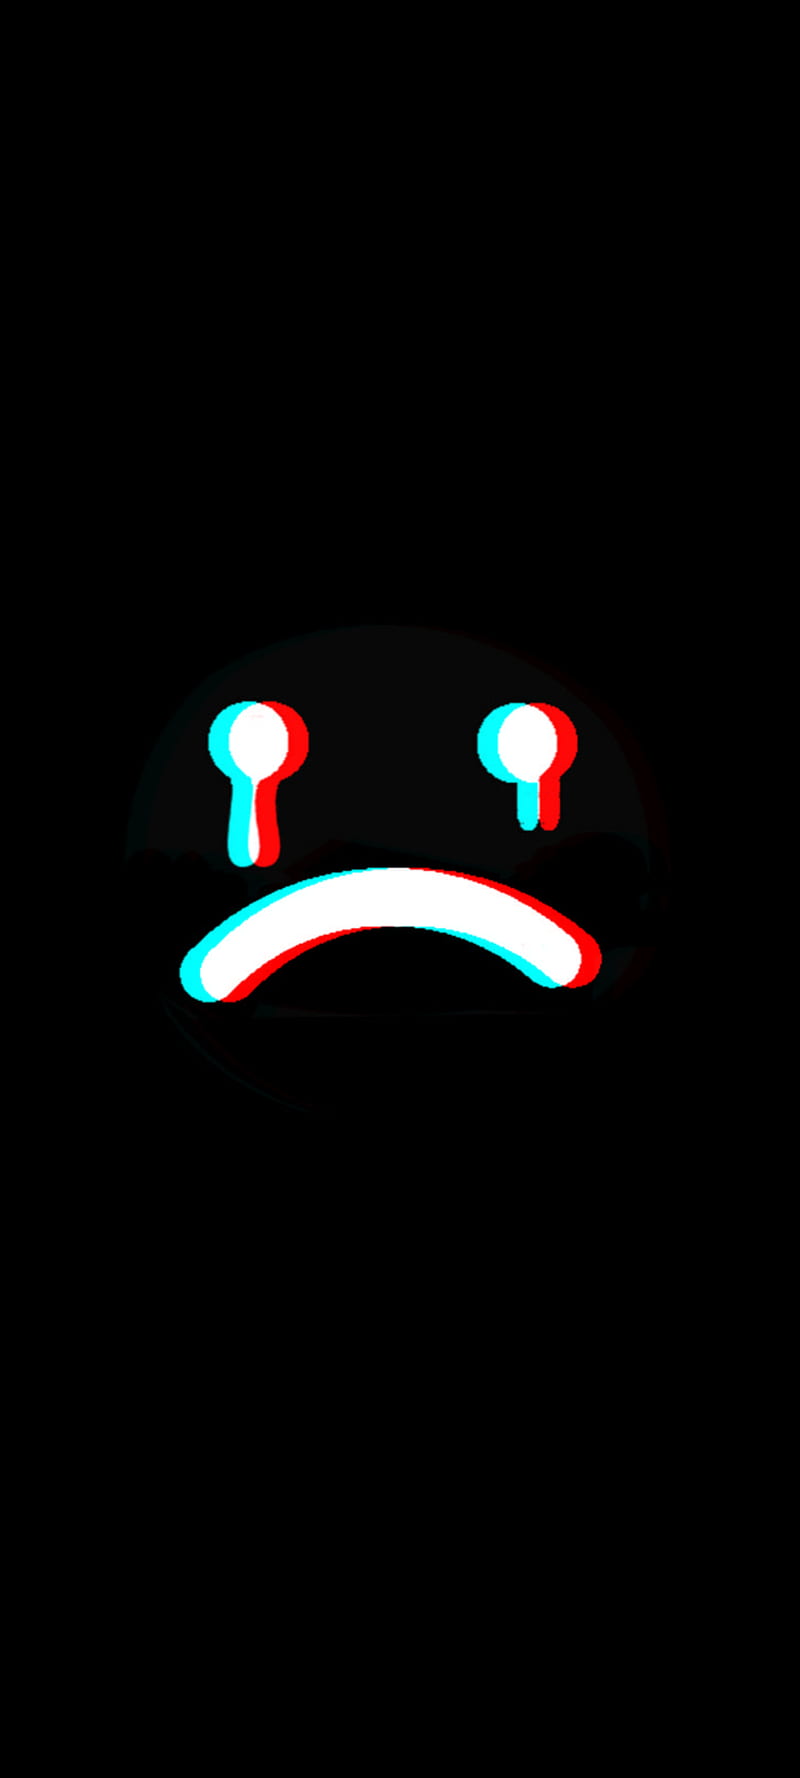 sad emoji face with black background